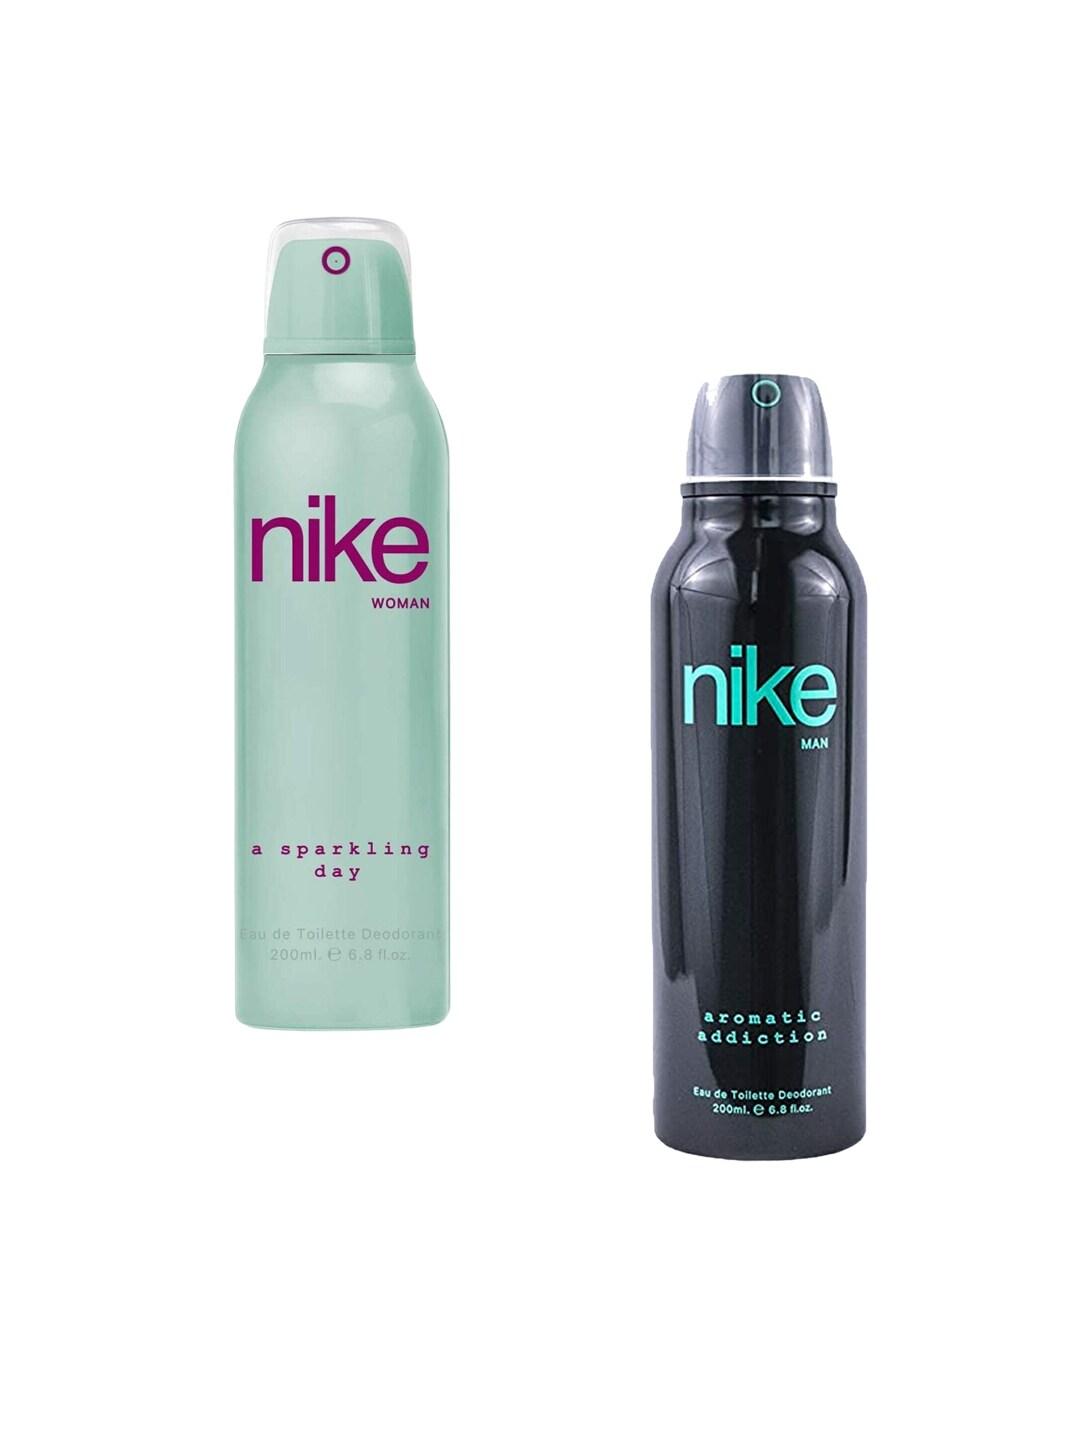 Nike Set Of 2 EDT Deodorant - Men Aromatic Addiction & Women A Sparkling Day - 200ml Each